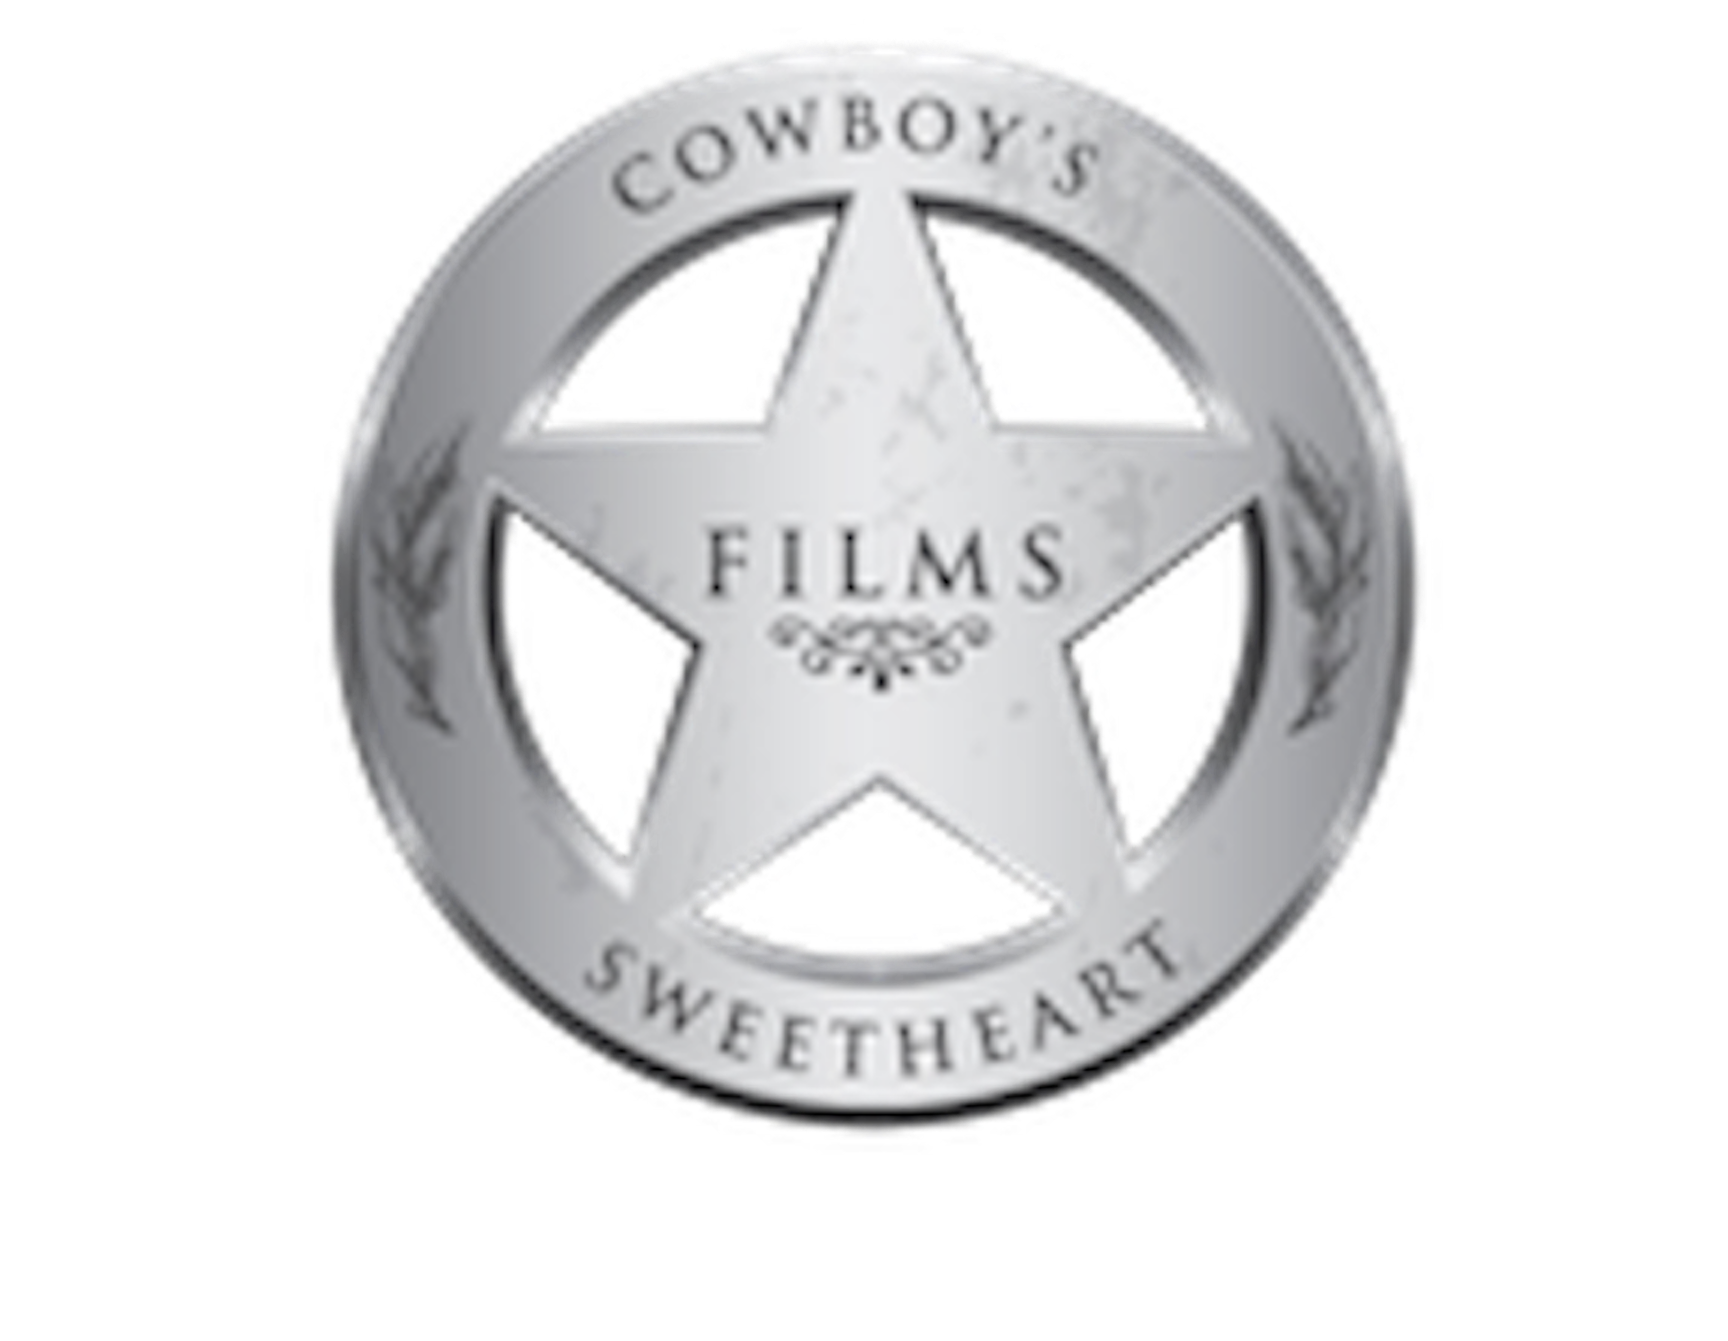 Cowboy’s Sweetheart Films